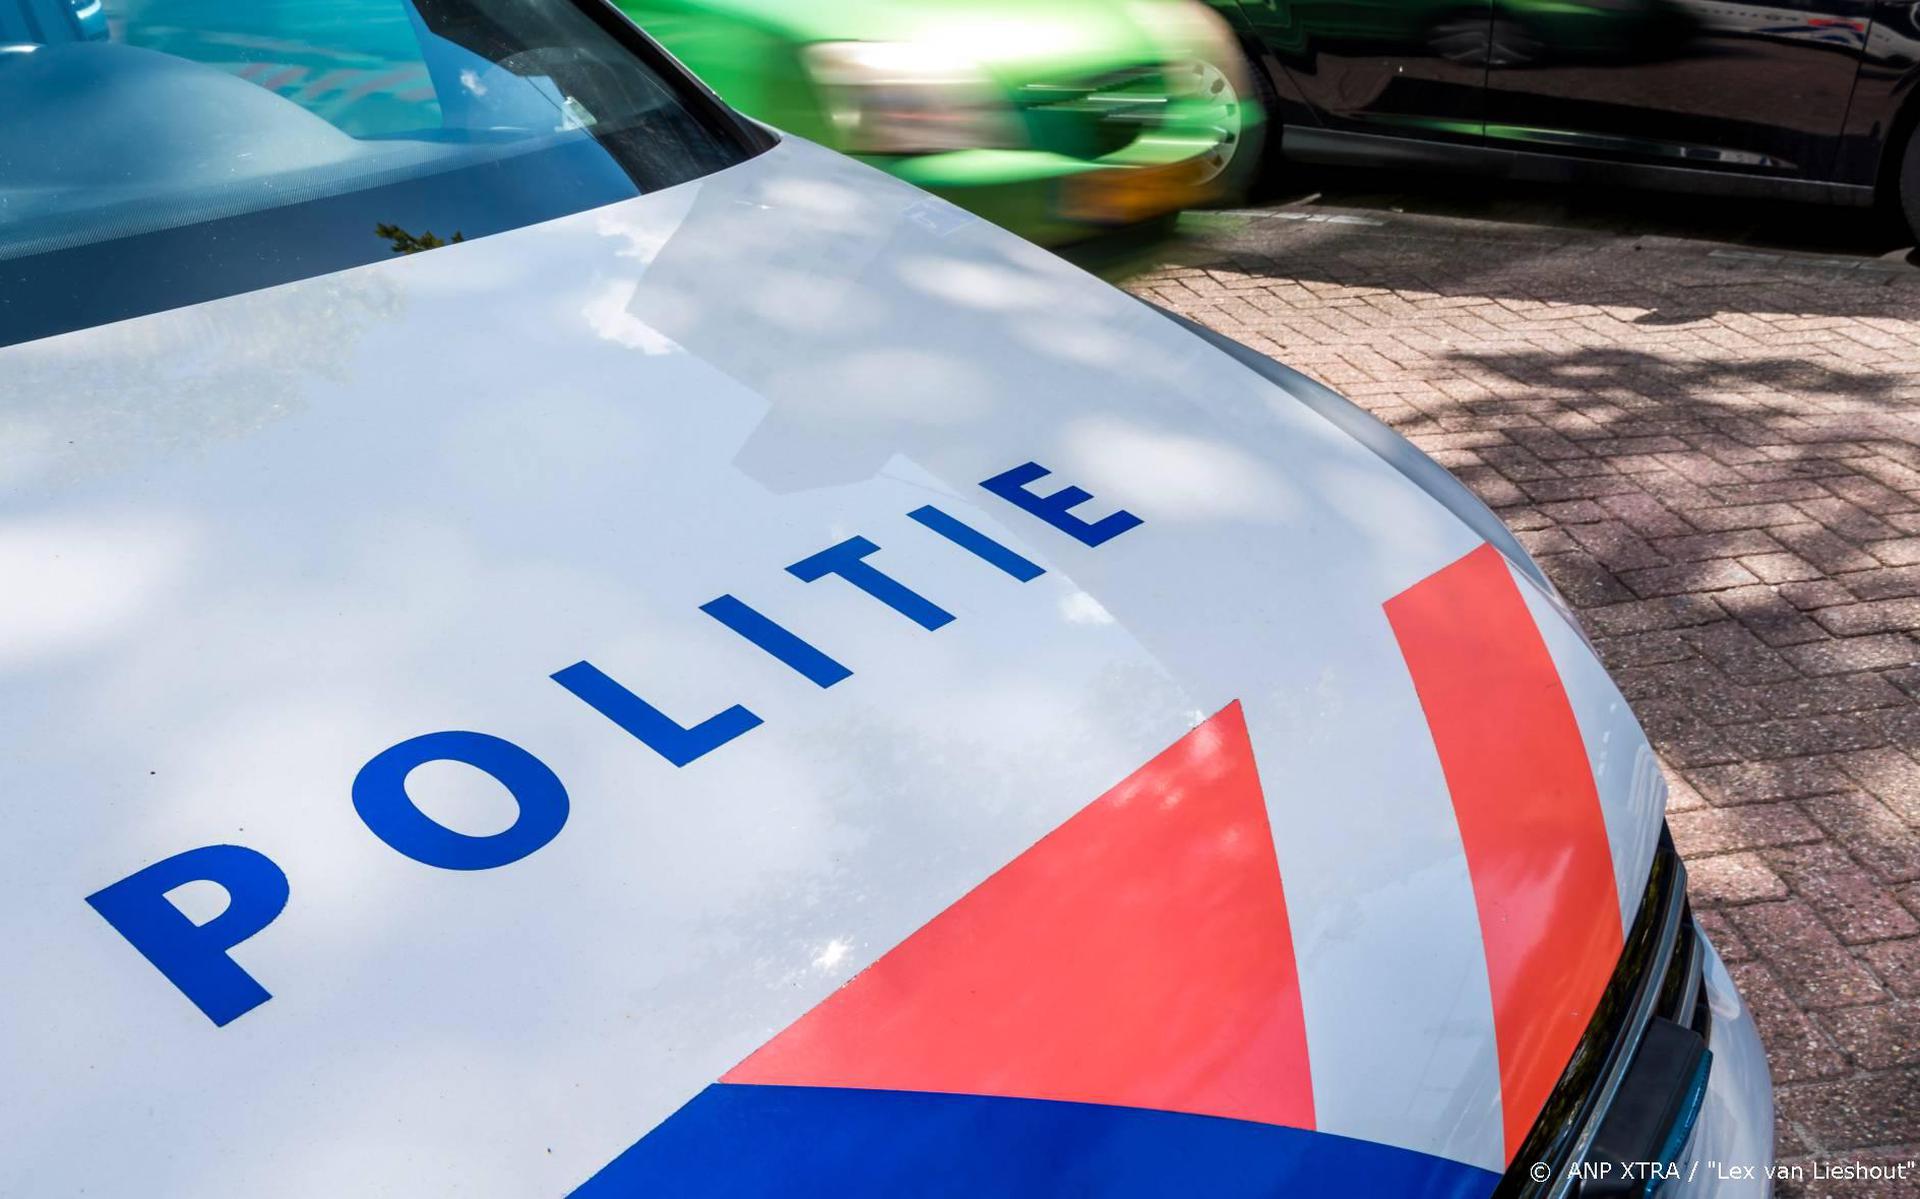 Ernstig gewonde bij steekincident in Tilburg